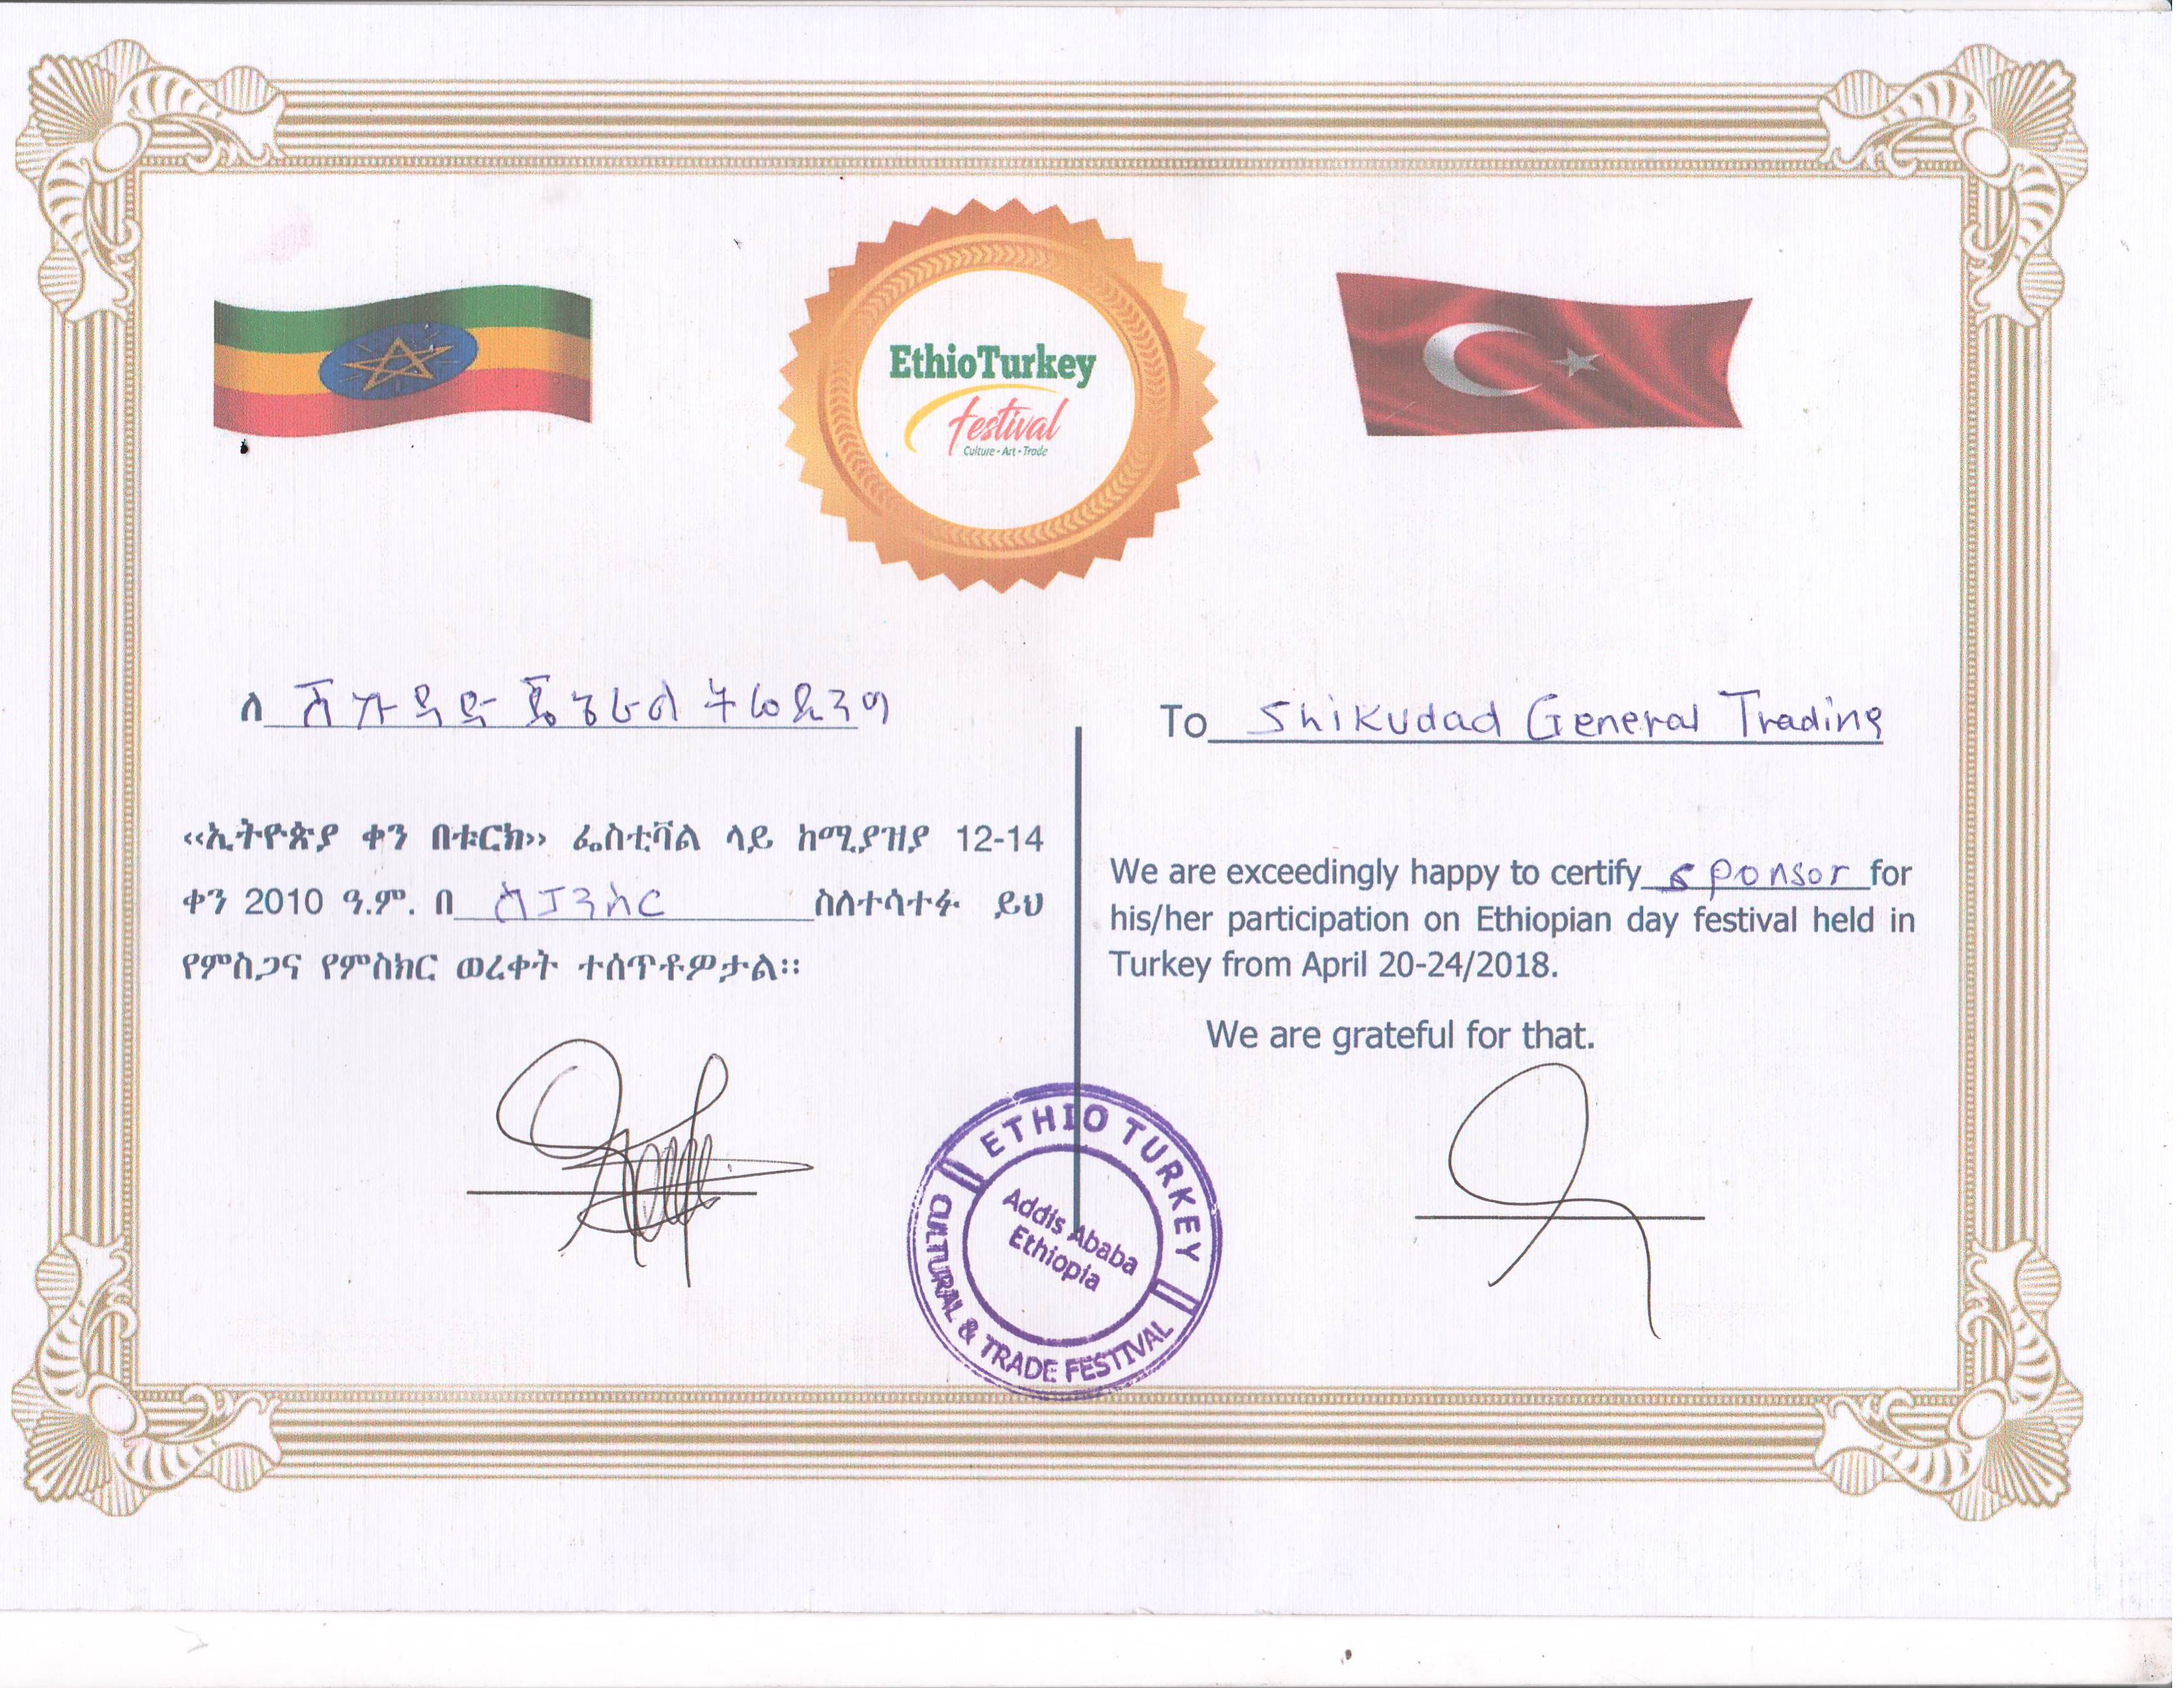 EthioTurkey Festival